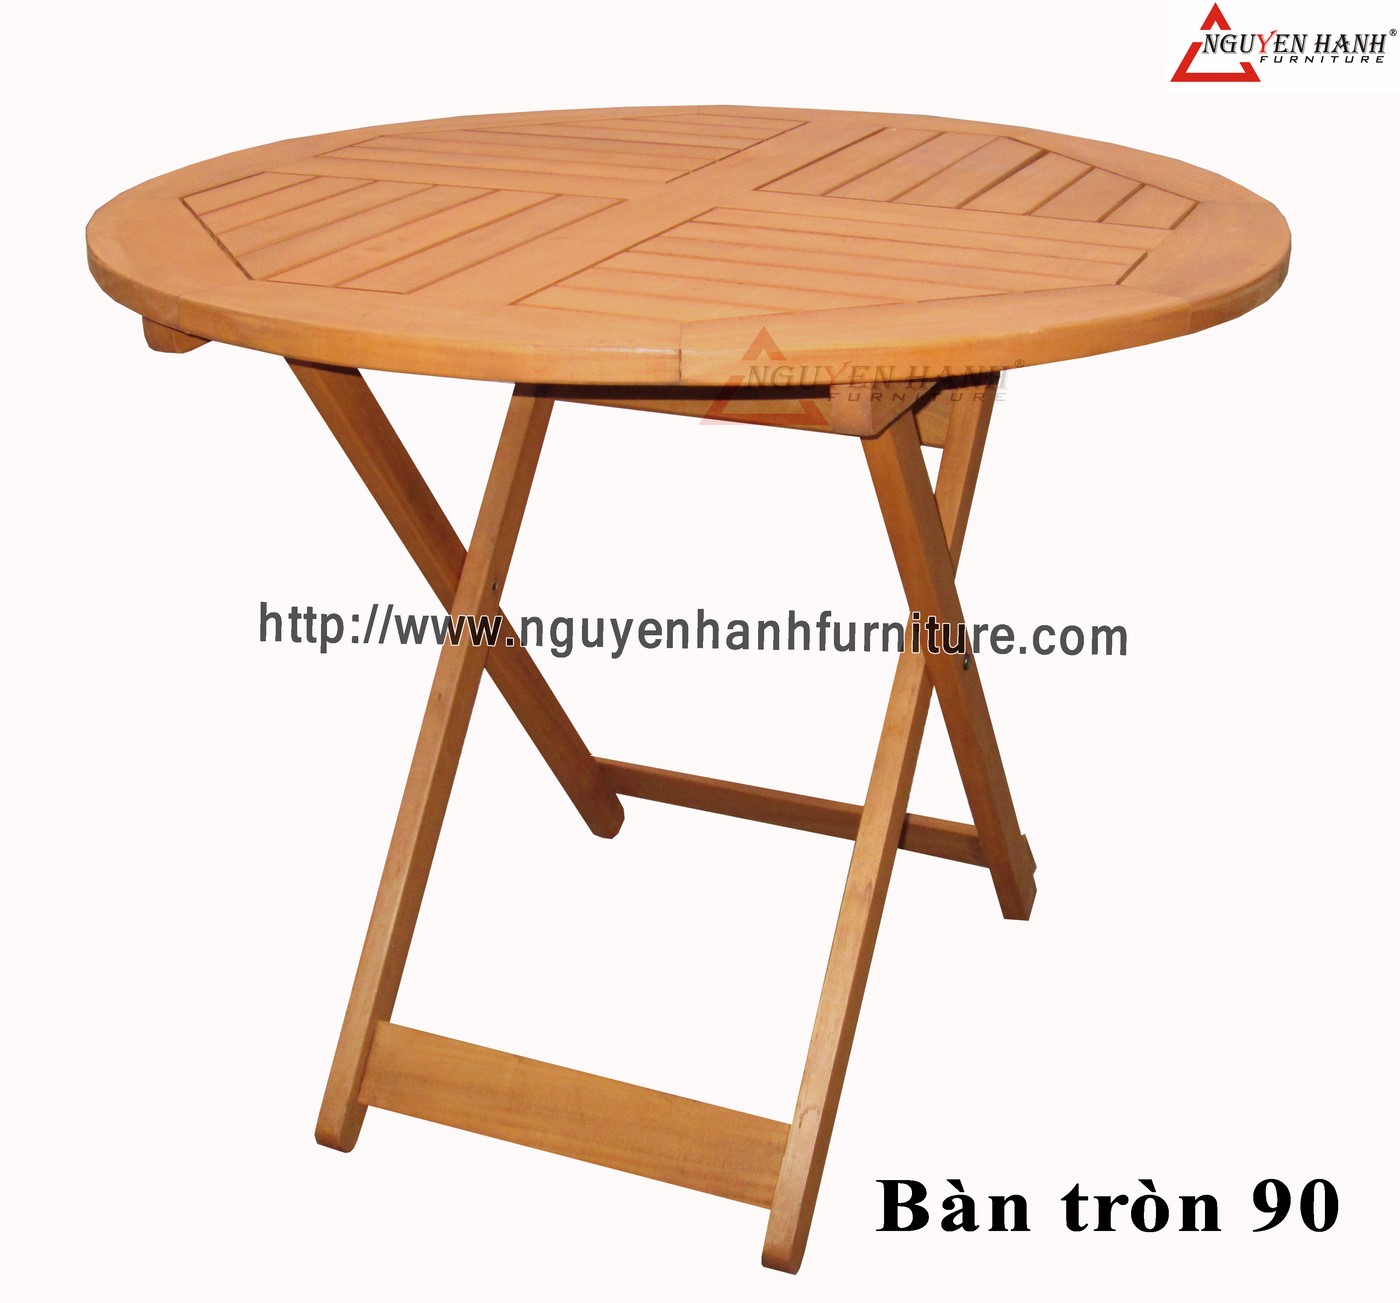 Name product: Folding Round table 90 - Description: Eucalyptus wood